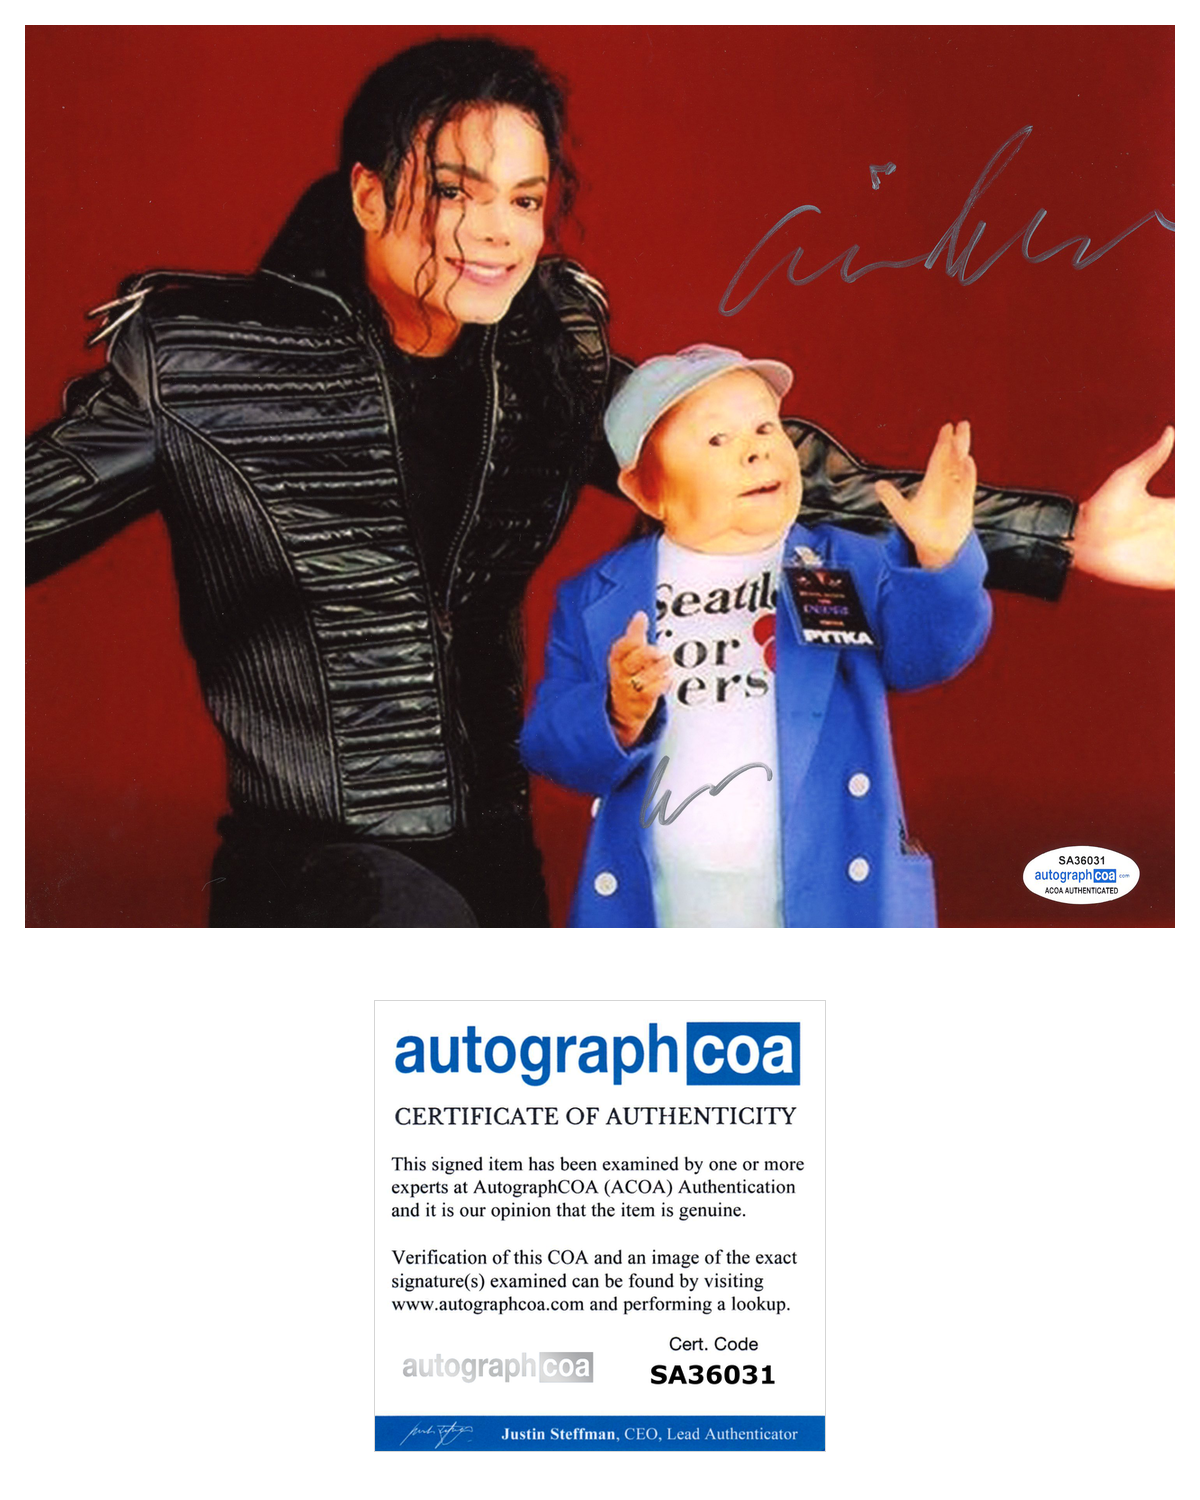 Michu Meszaros Signed Autograph 8x10 Photo Poster painting ALF Waxwork Michael Jackson ACOA COA